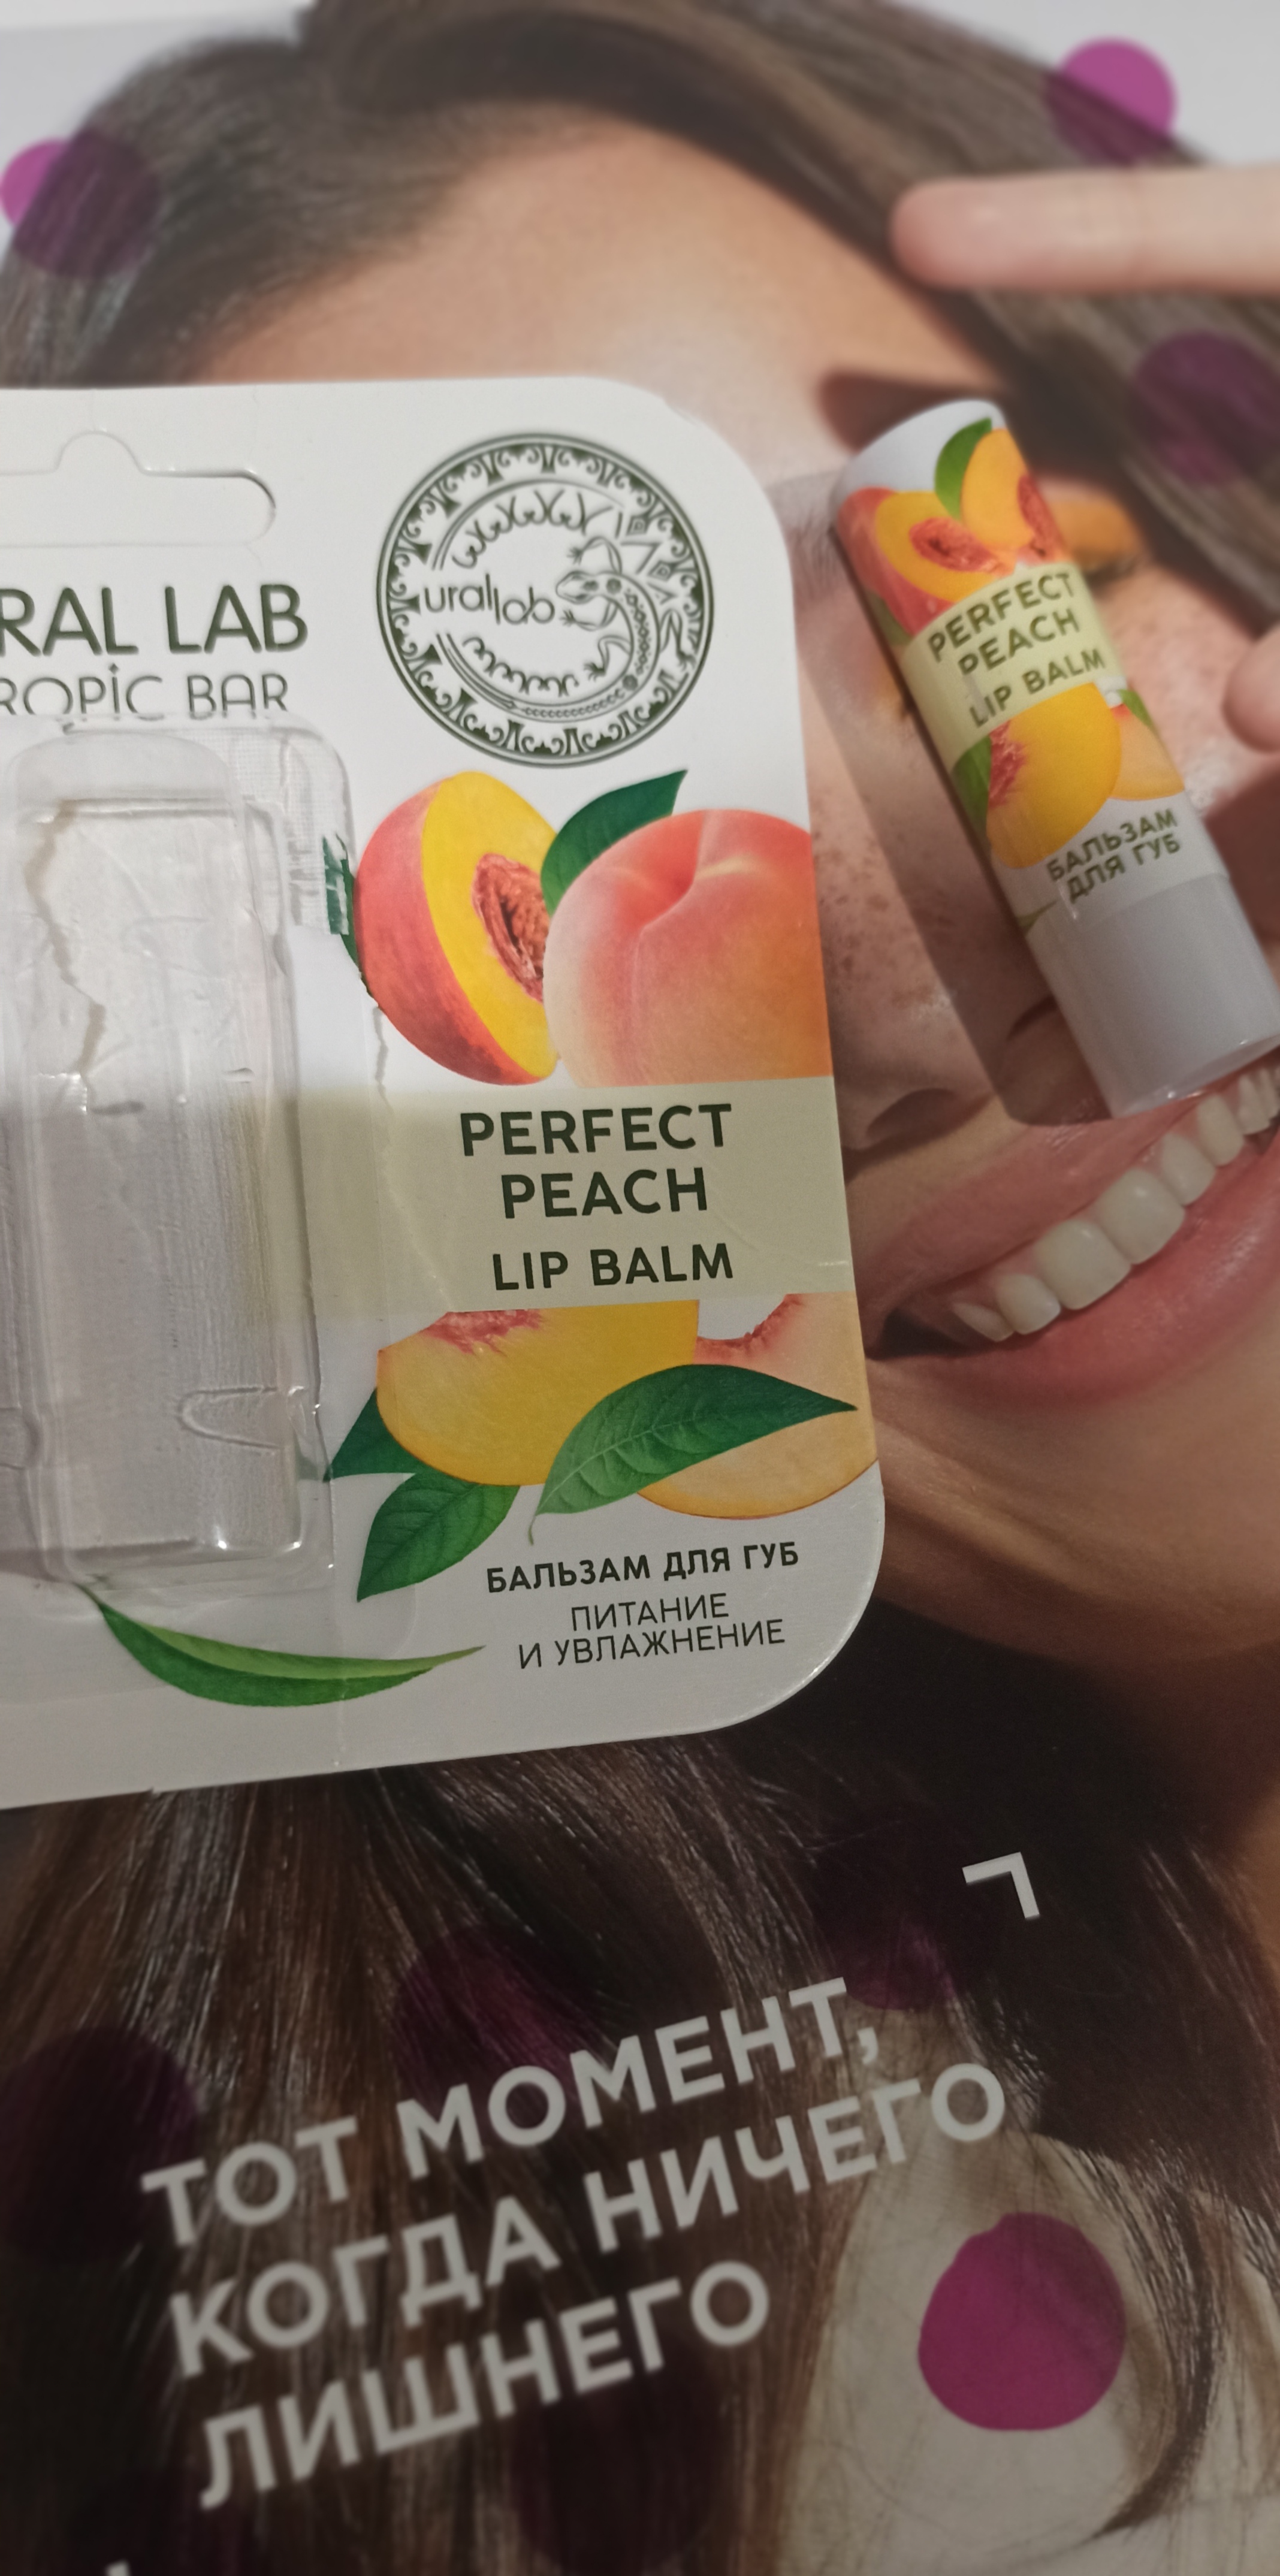 Фотография покупателя товара Бальзам для губ, аромат вишня, TROPIC BAR by URAL LAB - Фото 16